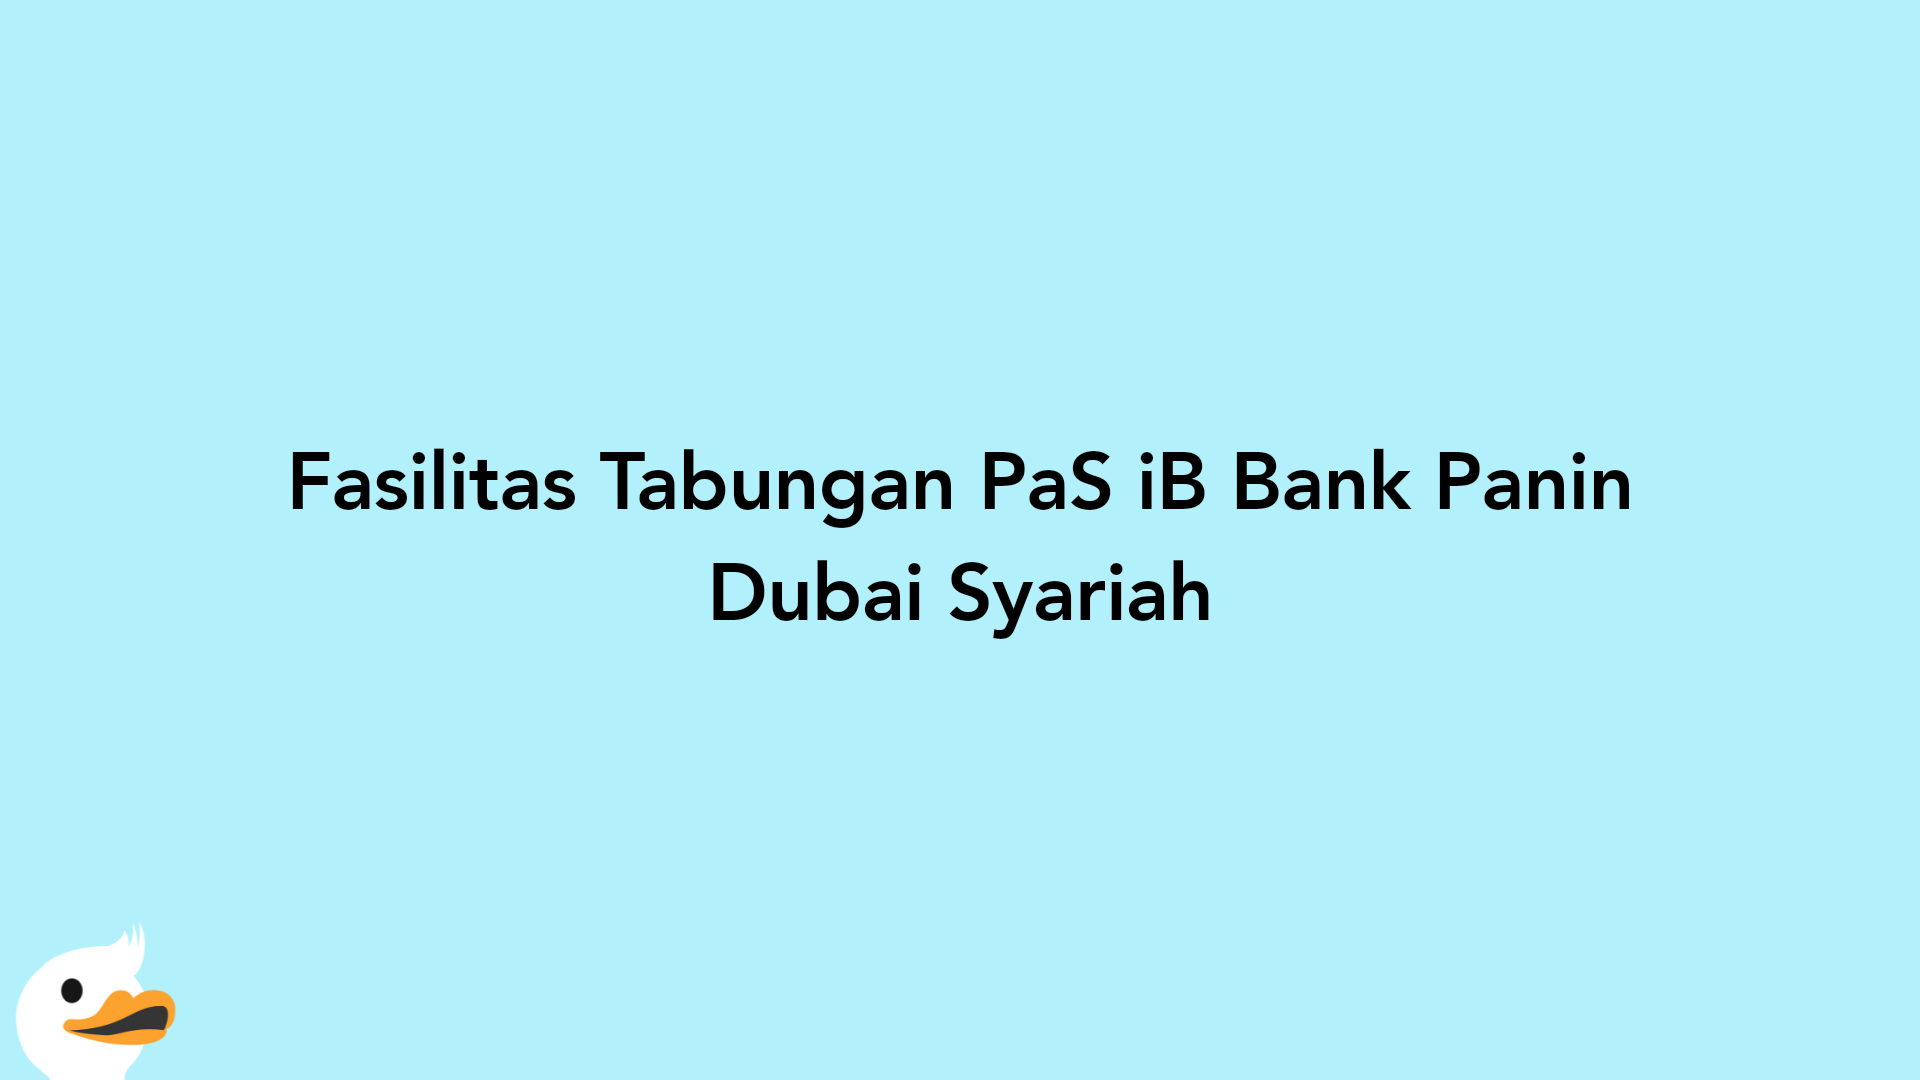 Fasilitas Tabungan PaS iB Bank Panin Dubai Syariah